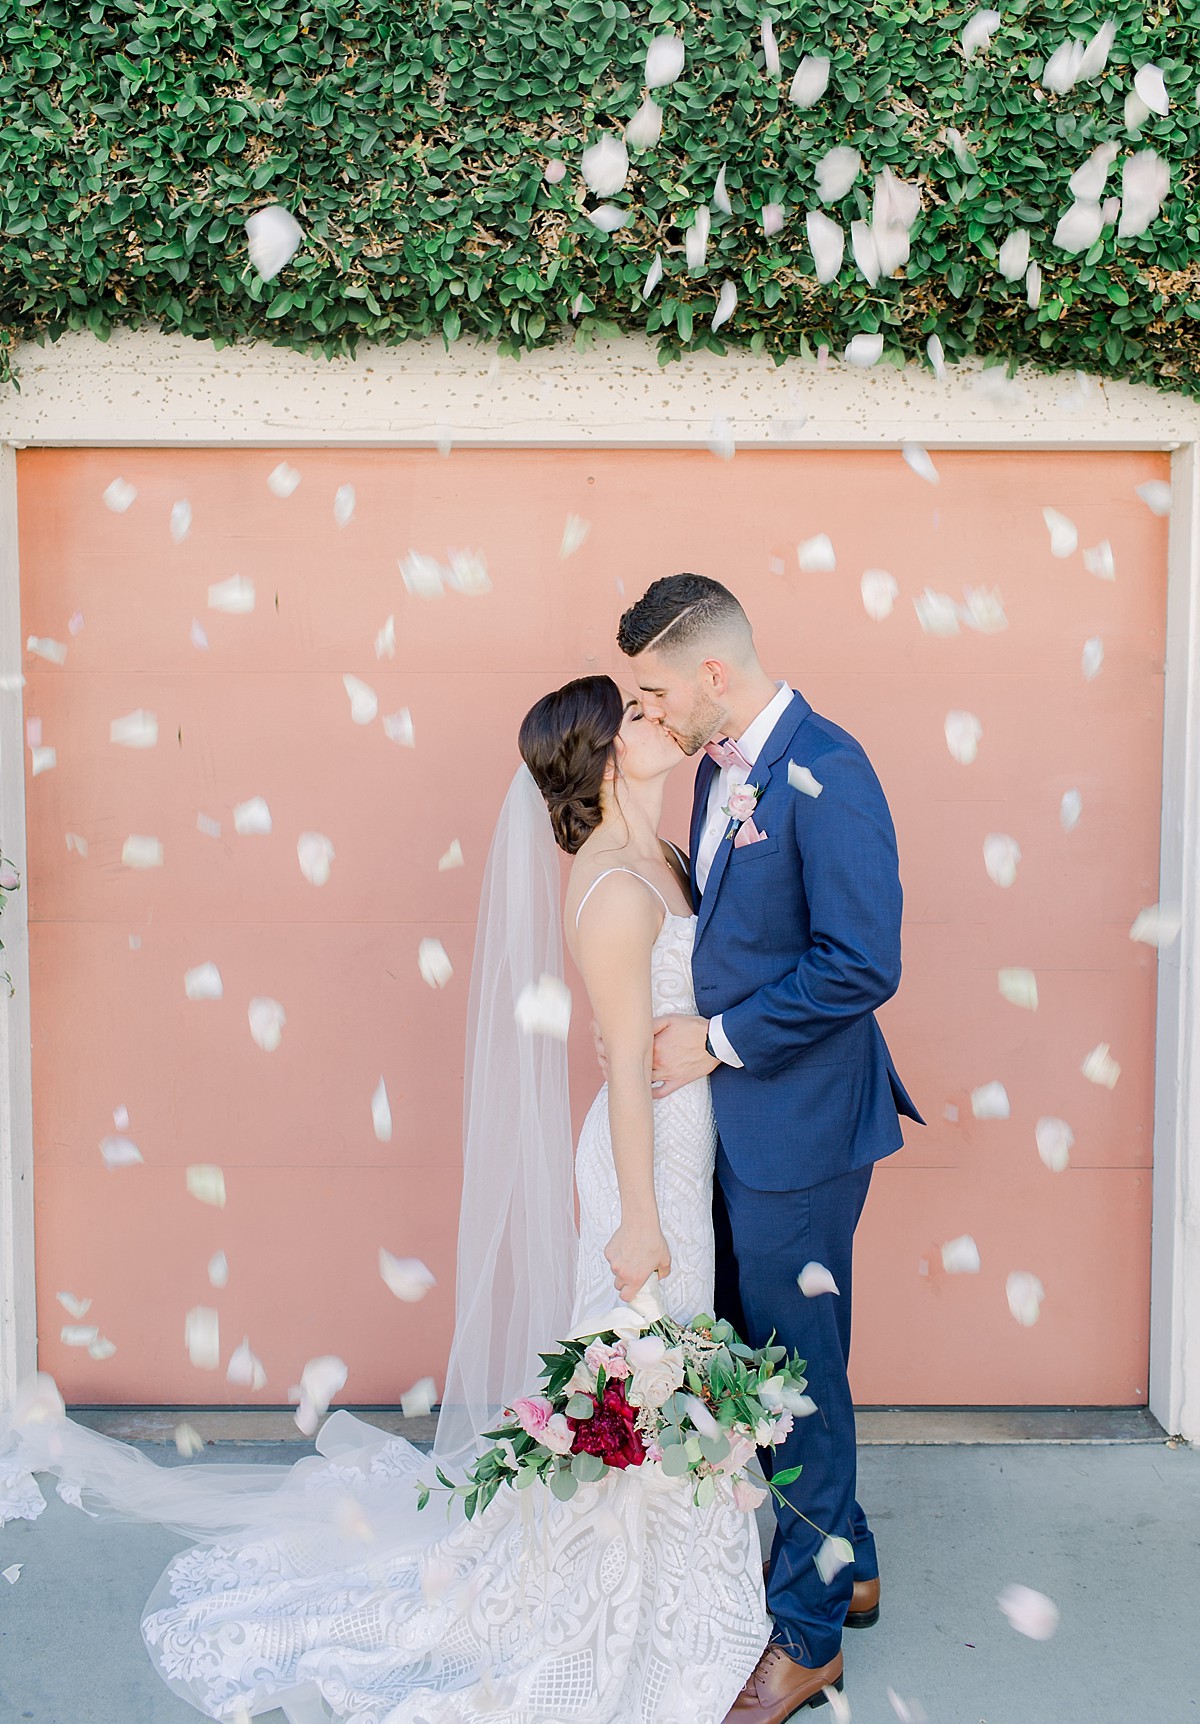 San Diego Wedding Photography at the Darlington House in La Jolla